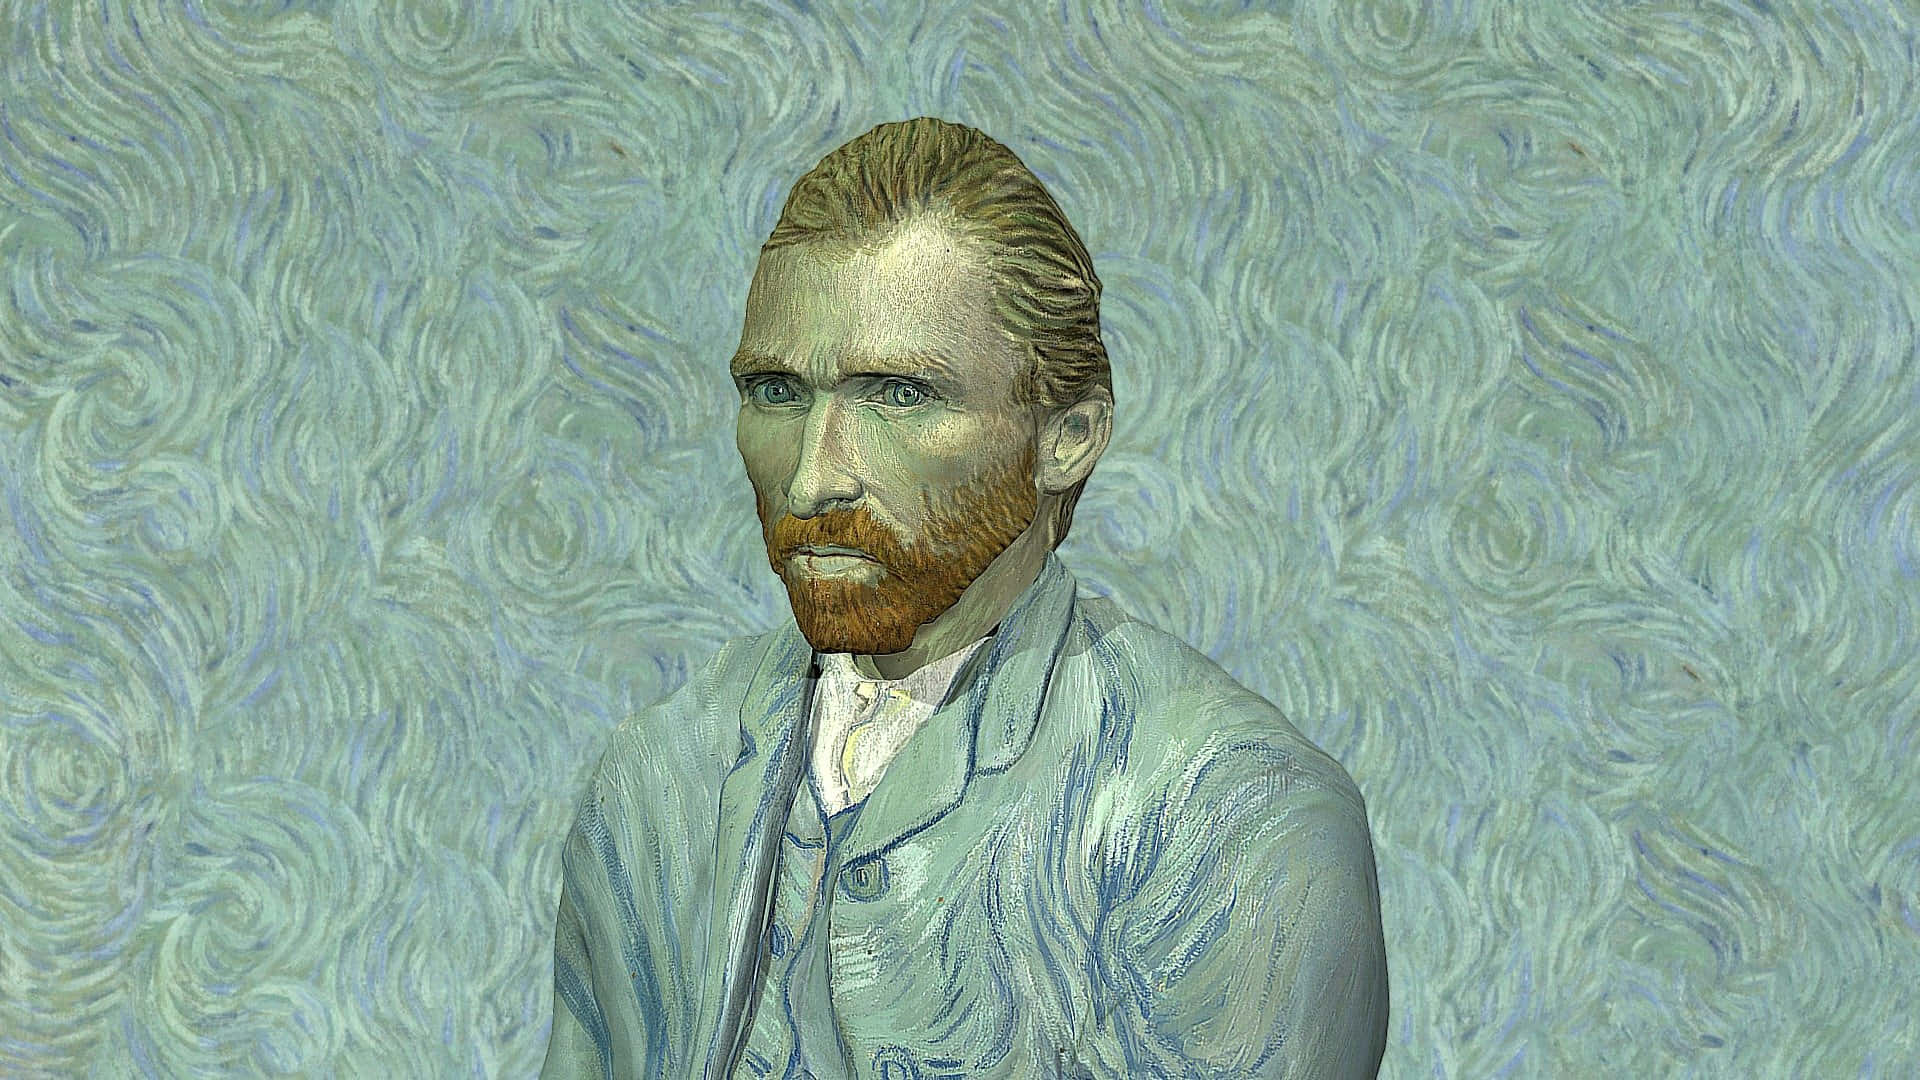 'Starry Night' painting by Dutch artist Vincent Van Gogh